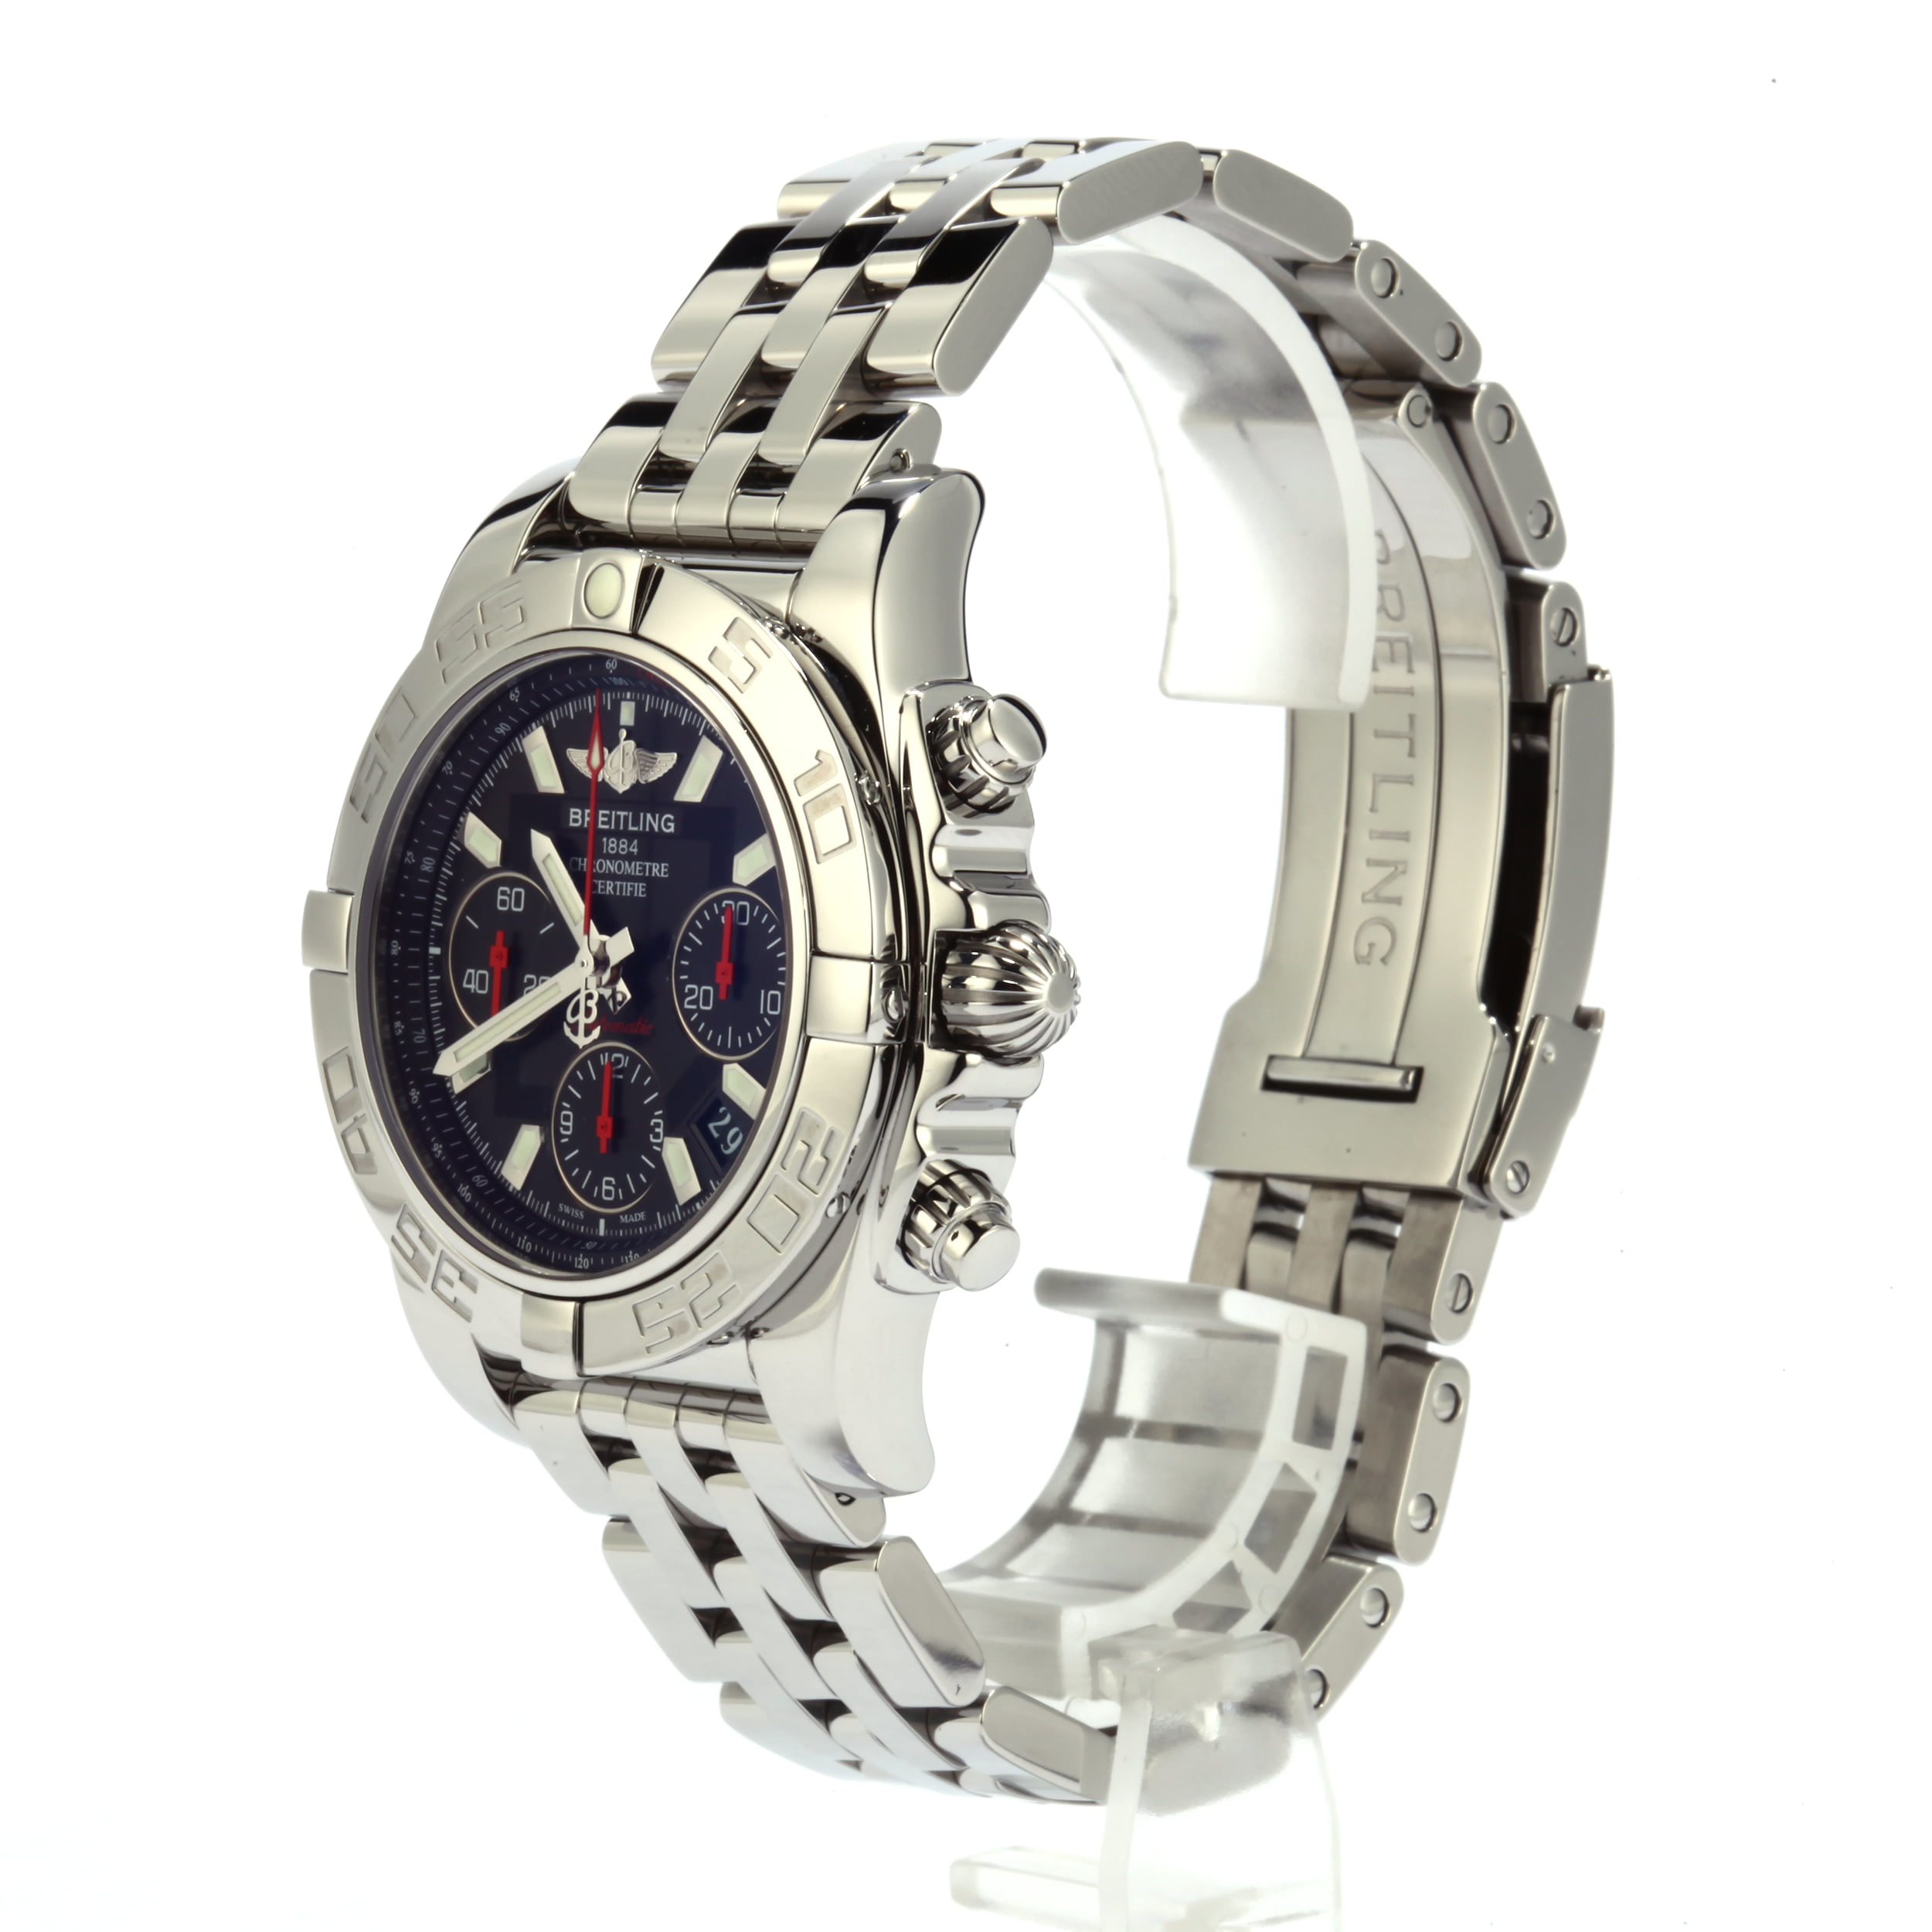 Buy Used Breitling Chronomat AB0141 | Bob's Watches - Sku: 128061